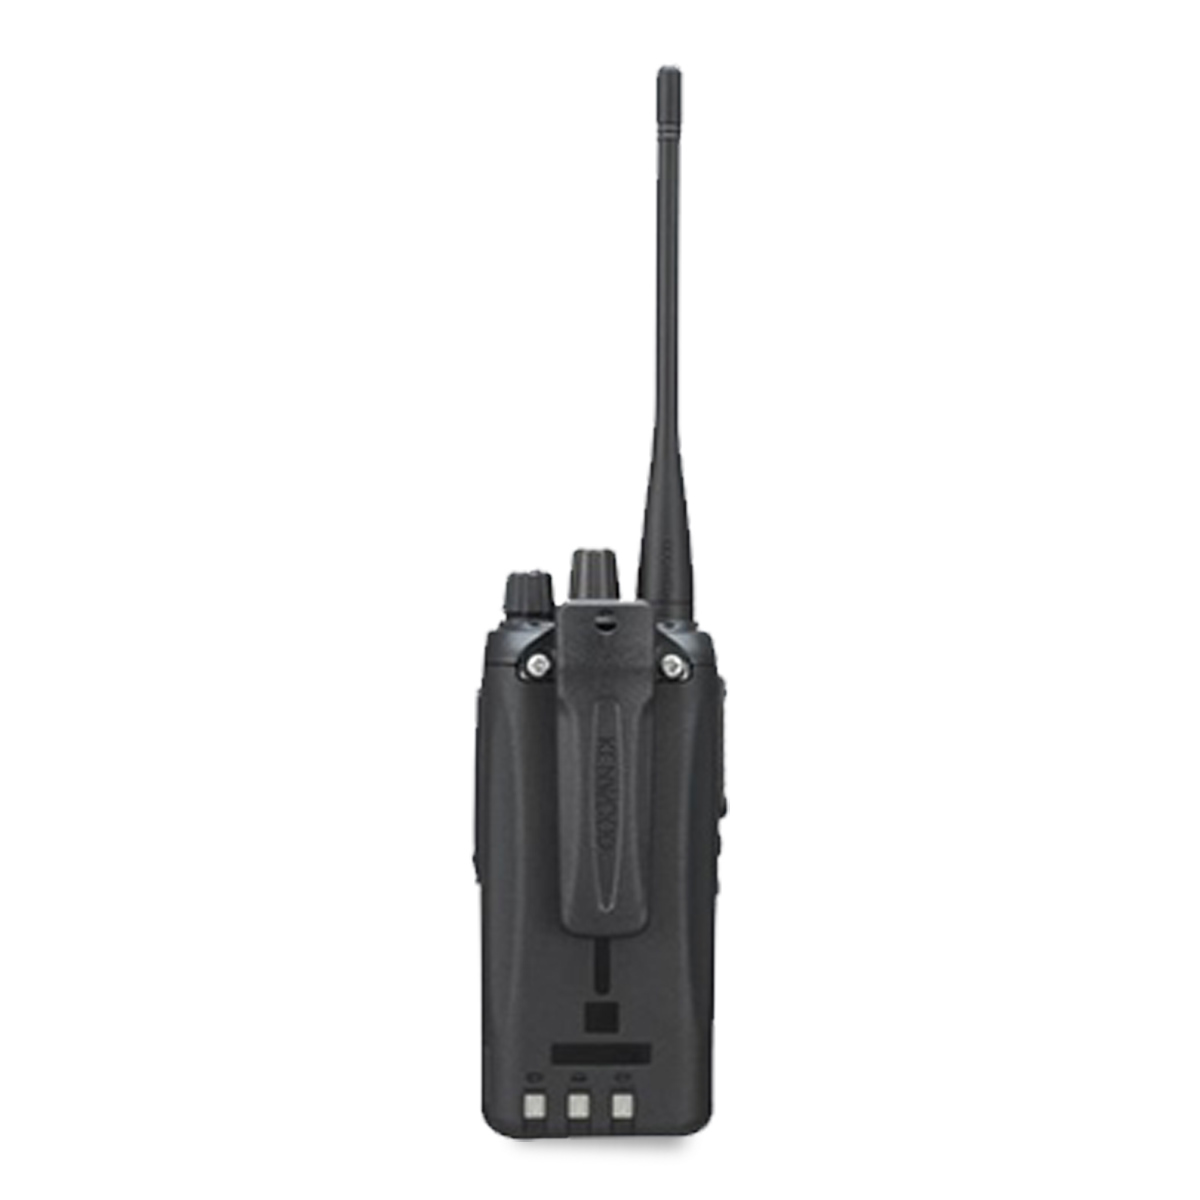 Radio KENWOOD NX-1200 Digital VHF 136-174 MHz sin pantalla y sin teclado